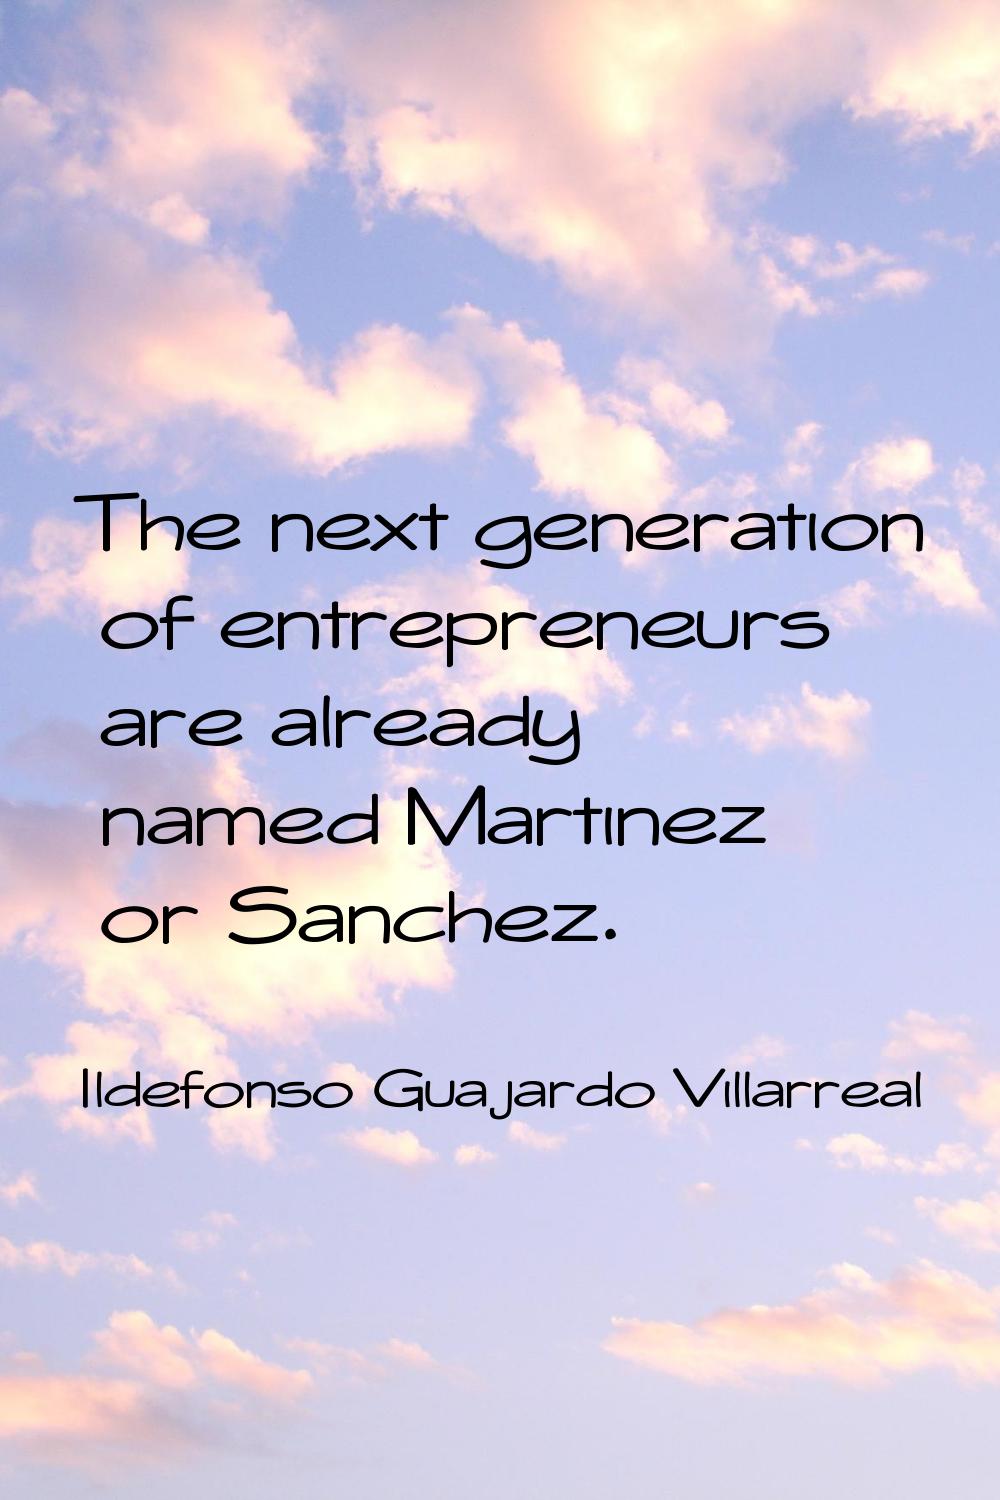 The next generation of entrepreneurs are already named Martinez or Sanchez.